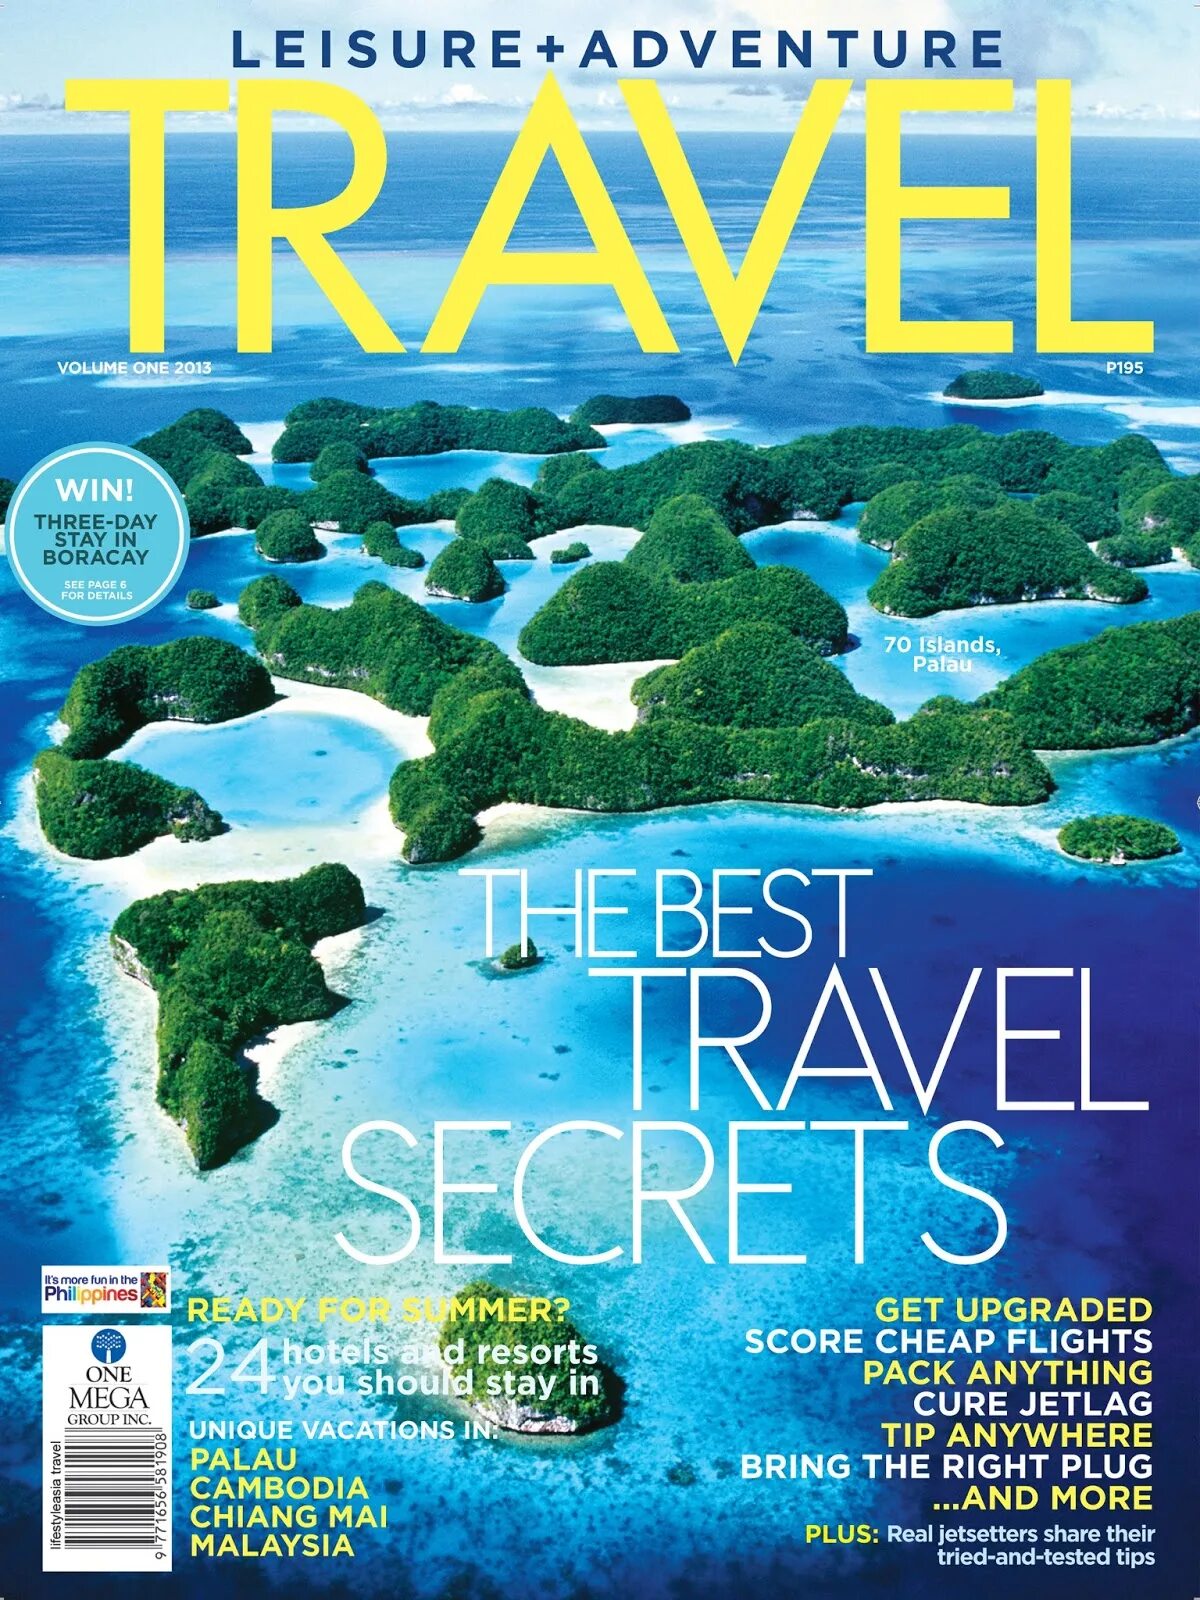 Обложка журнала путешествий. Travel журналы. Журнал о путешествиях. Журналы путешественника. Traveling magazine